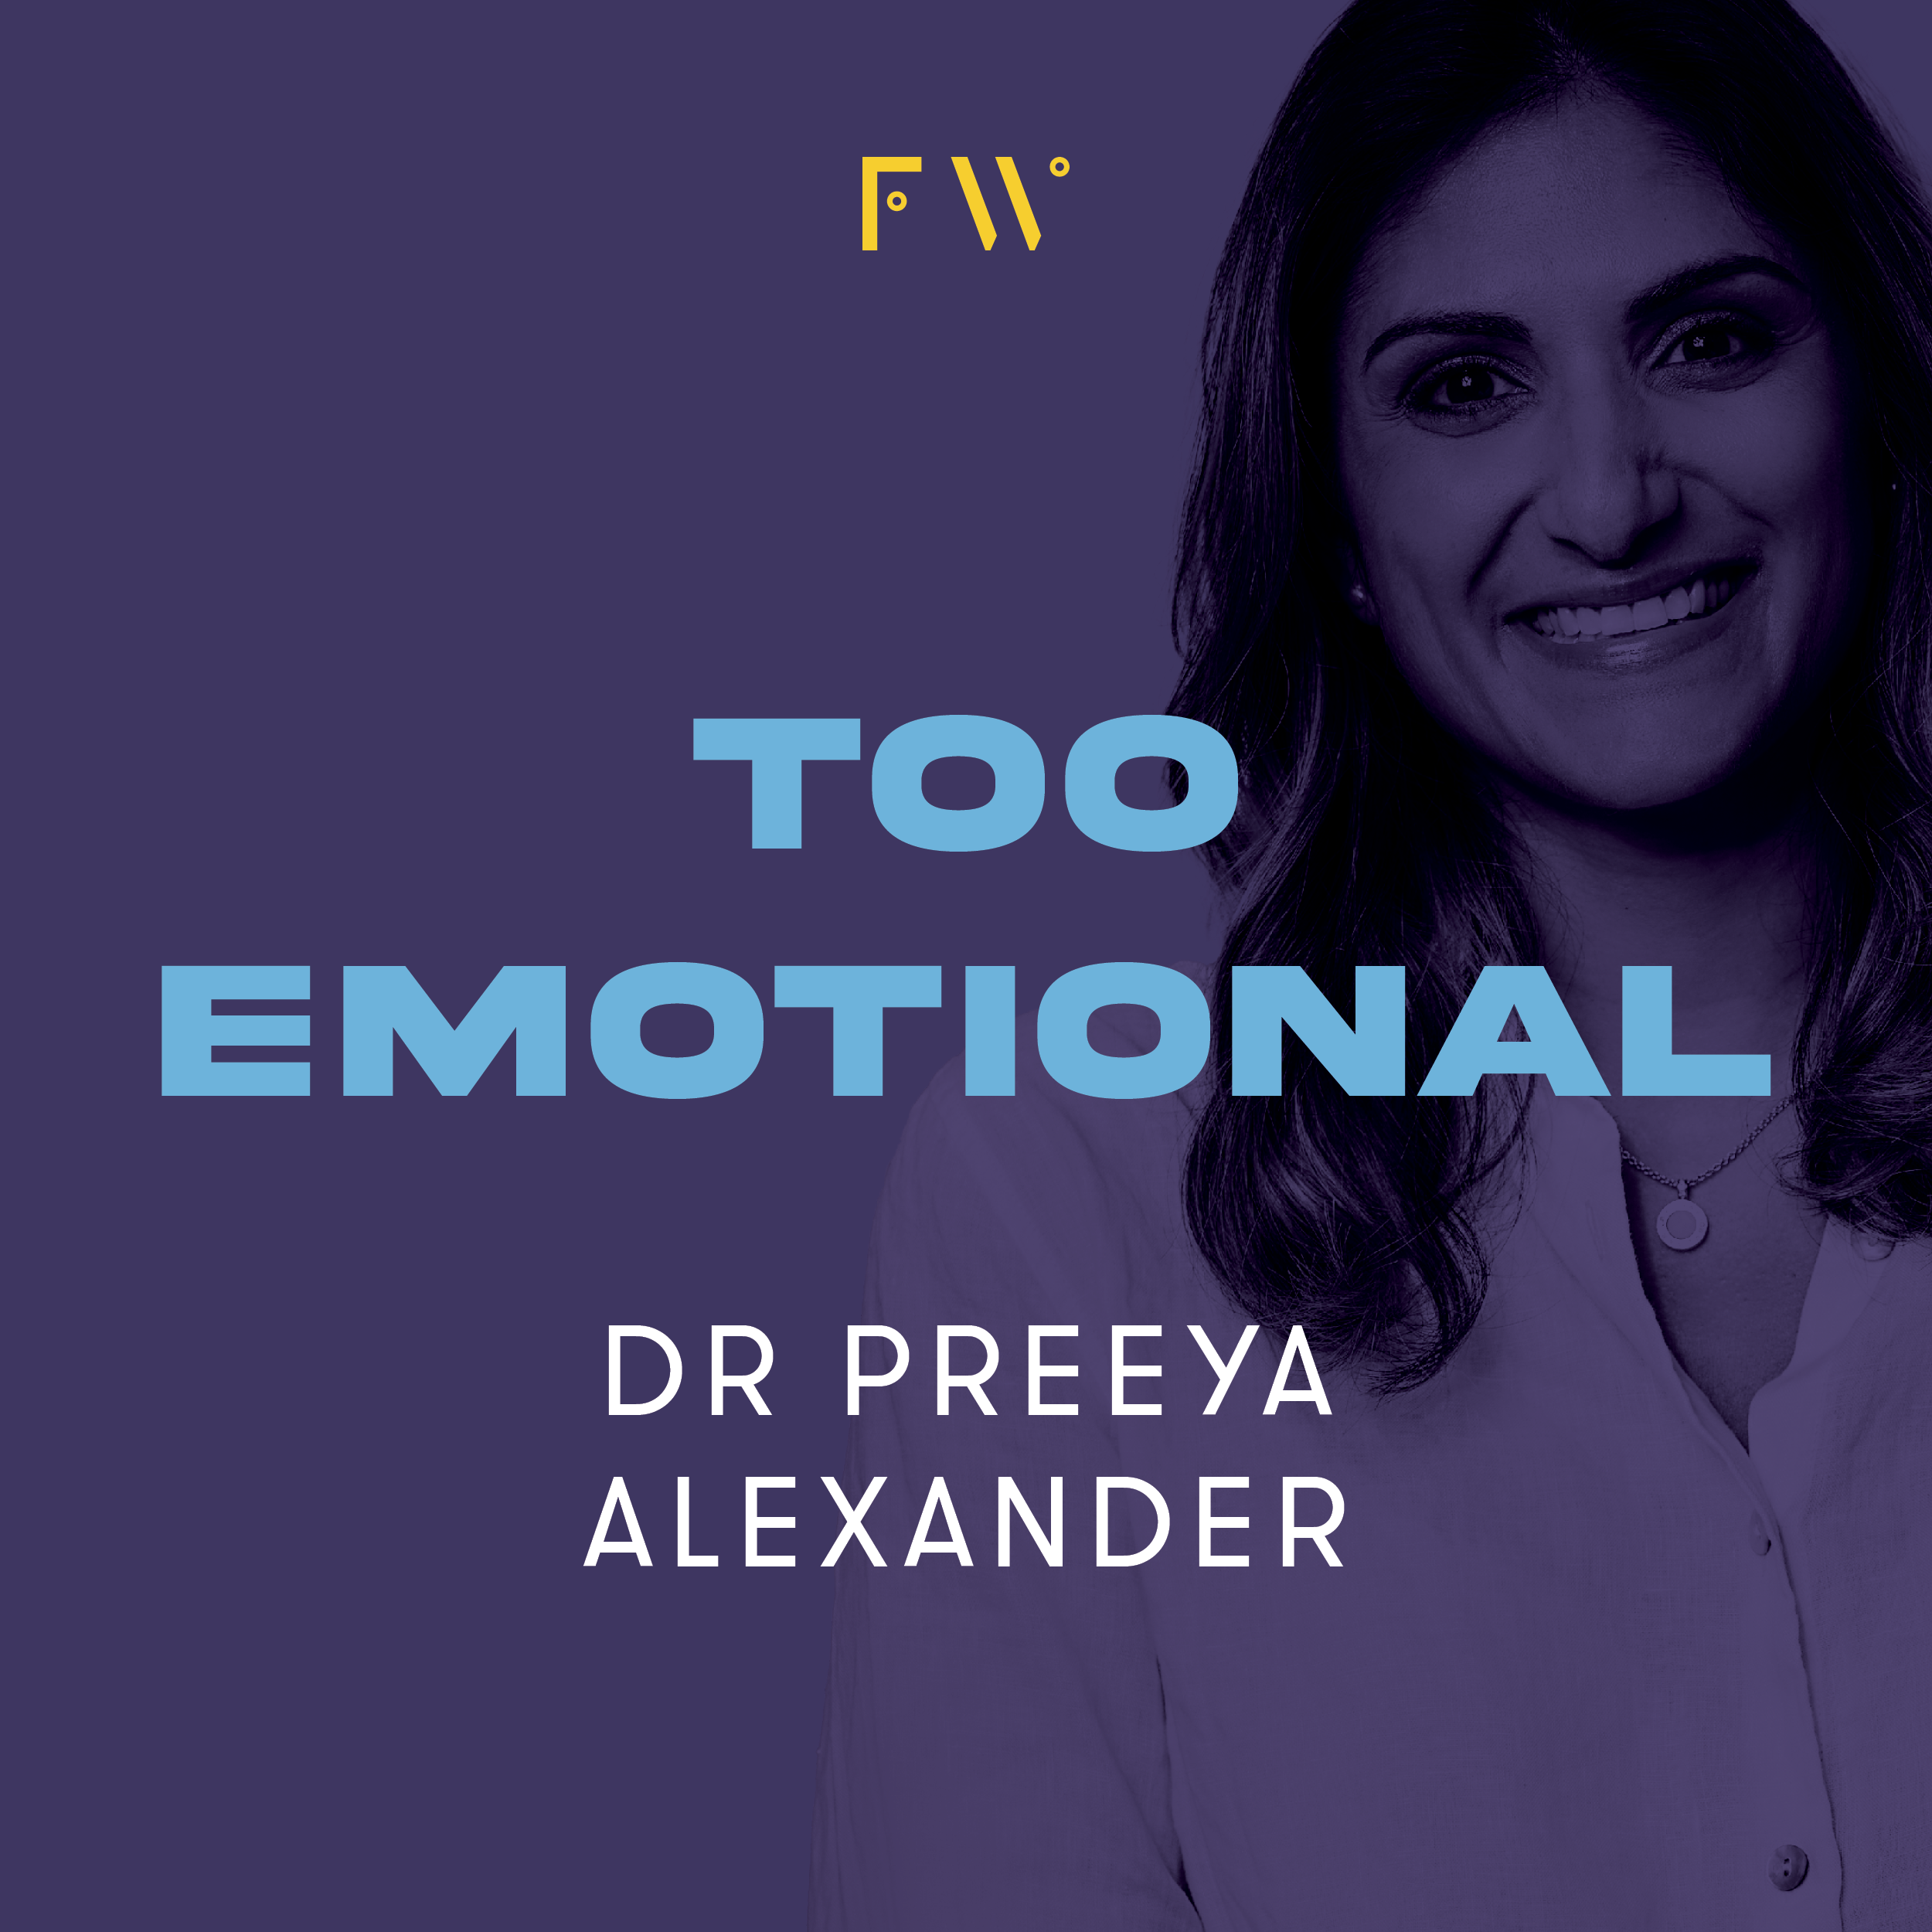 8. Dr Preeya Alexander was "too emotional"